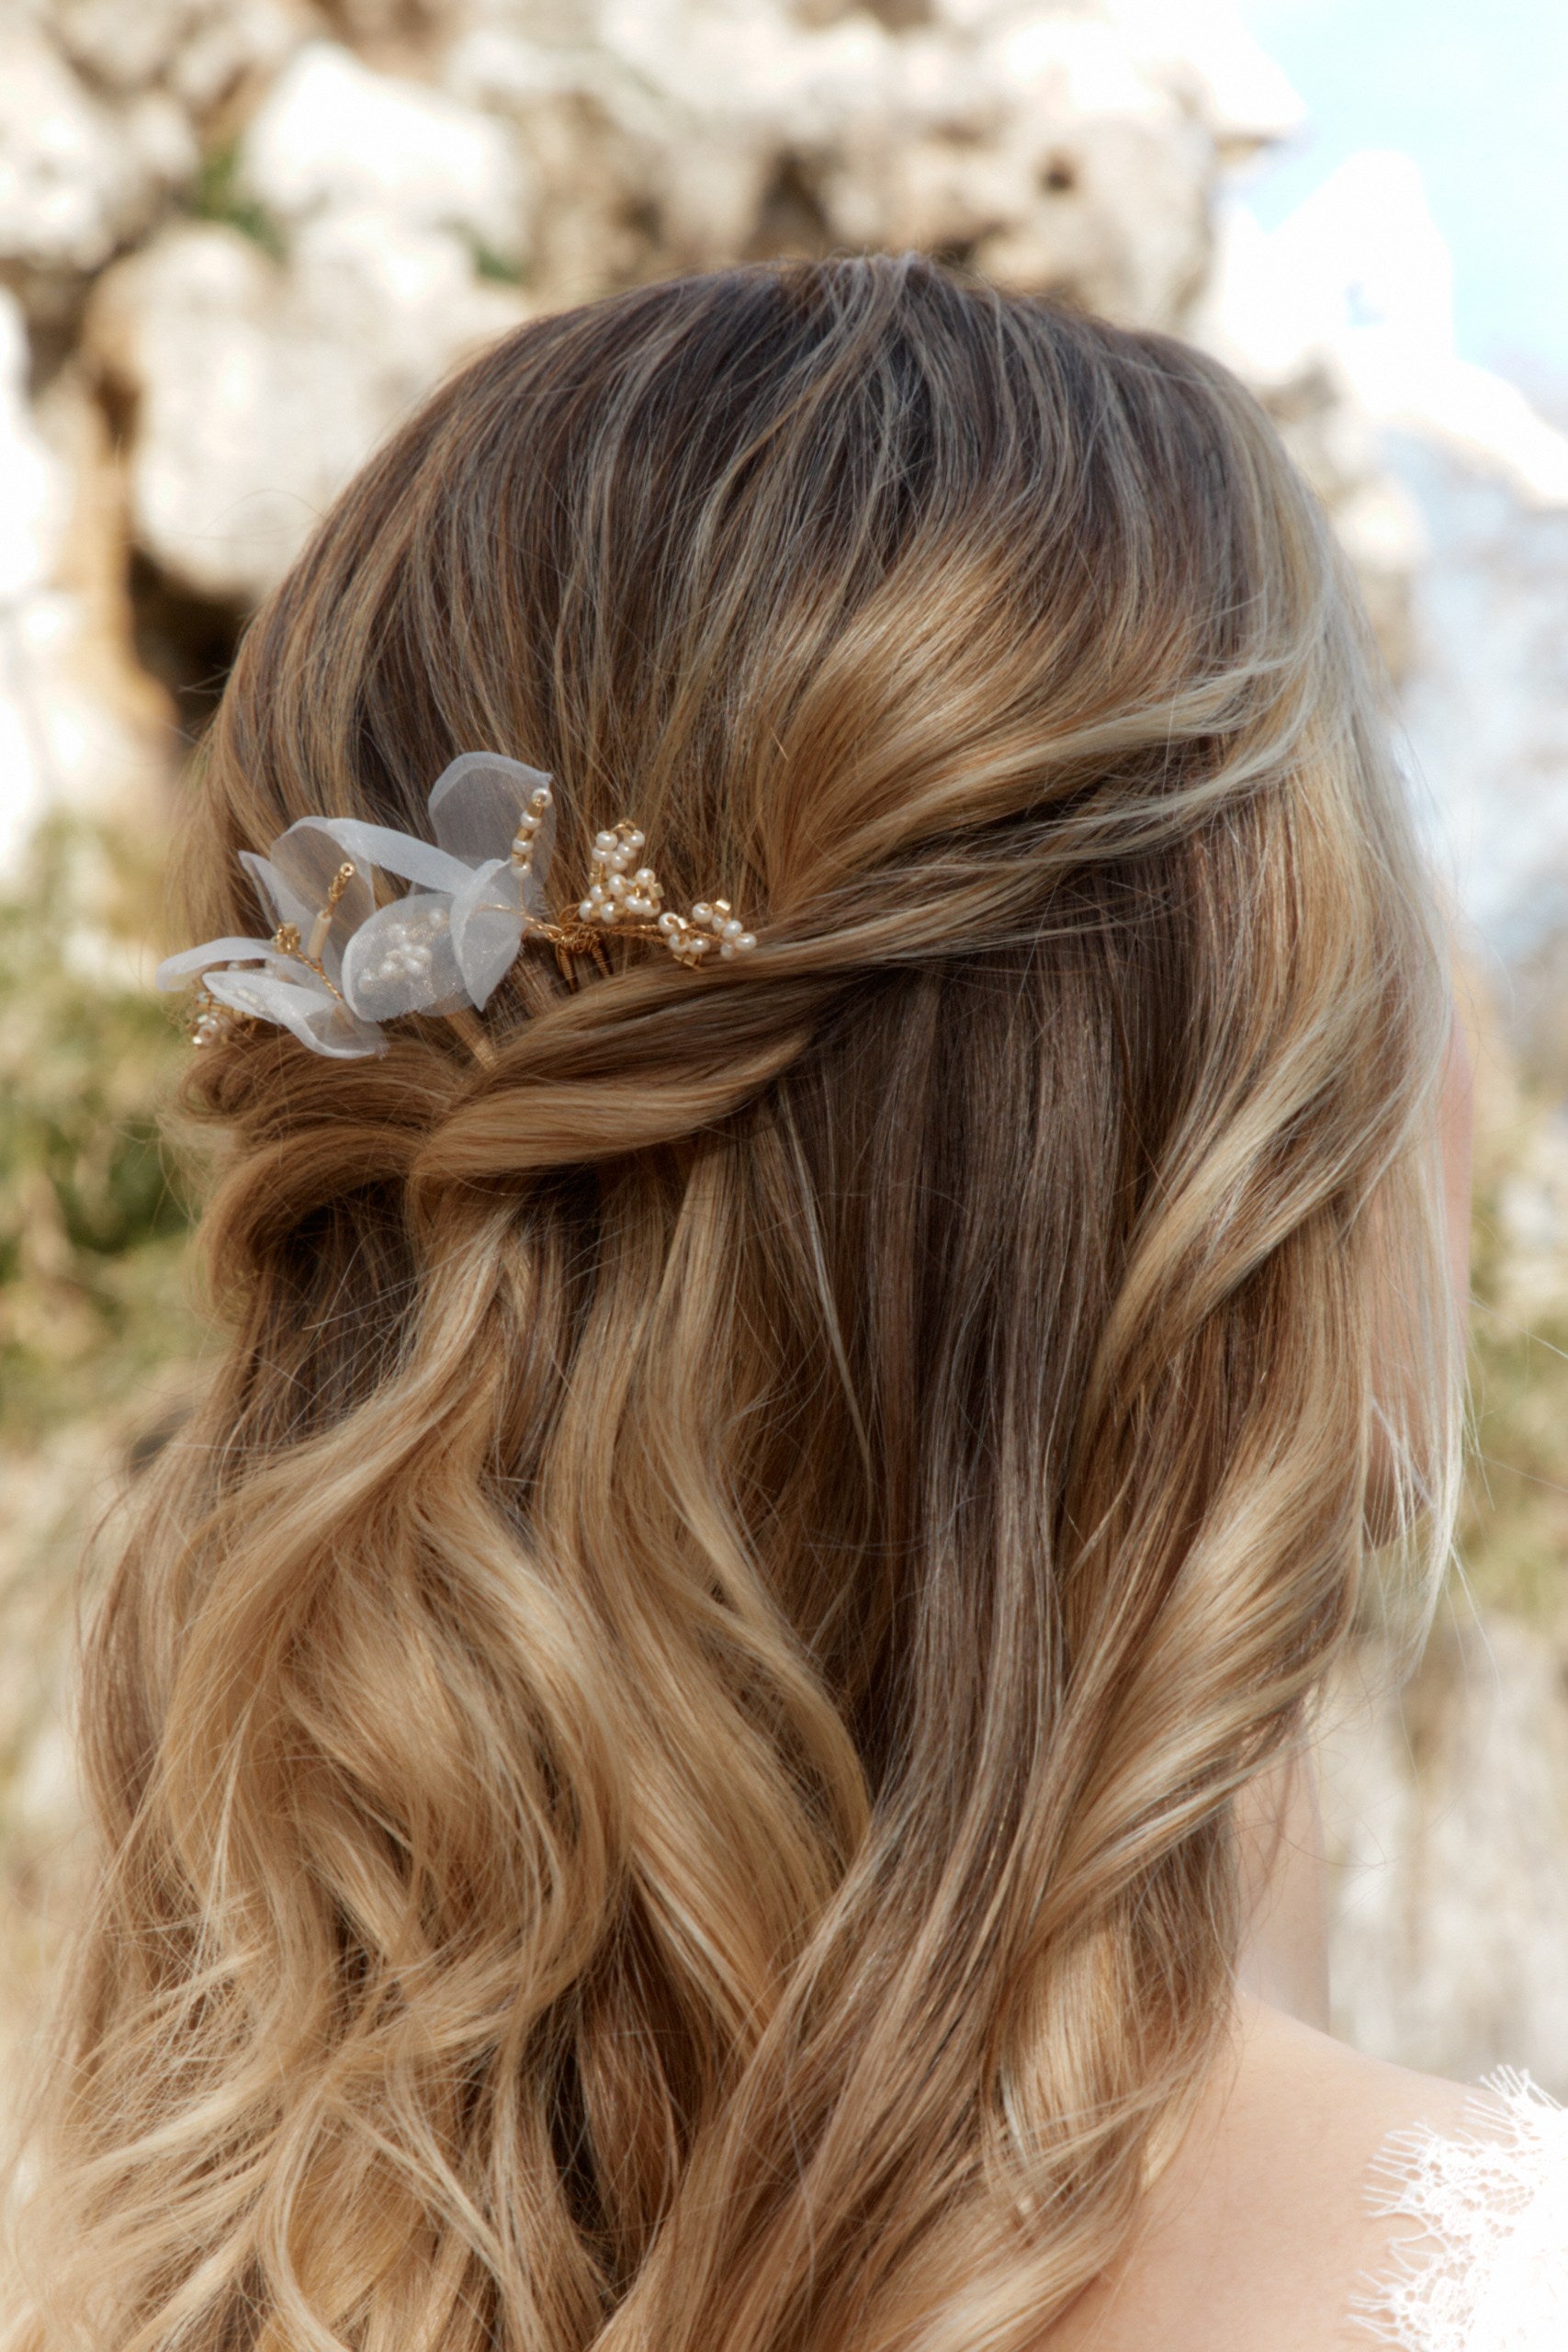 Floral wedding hair accessories